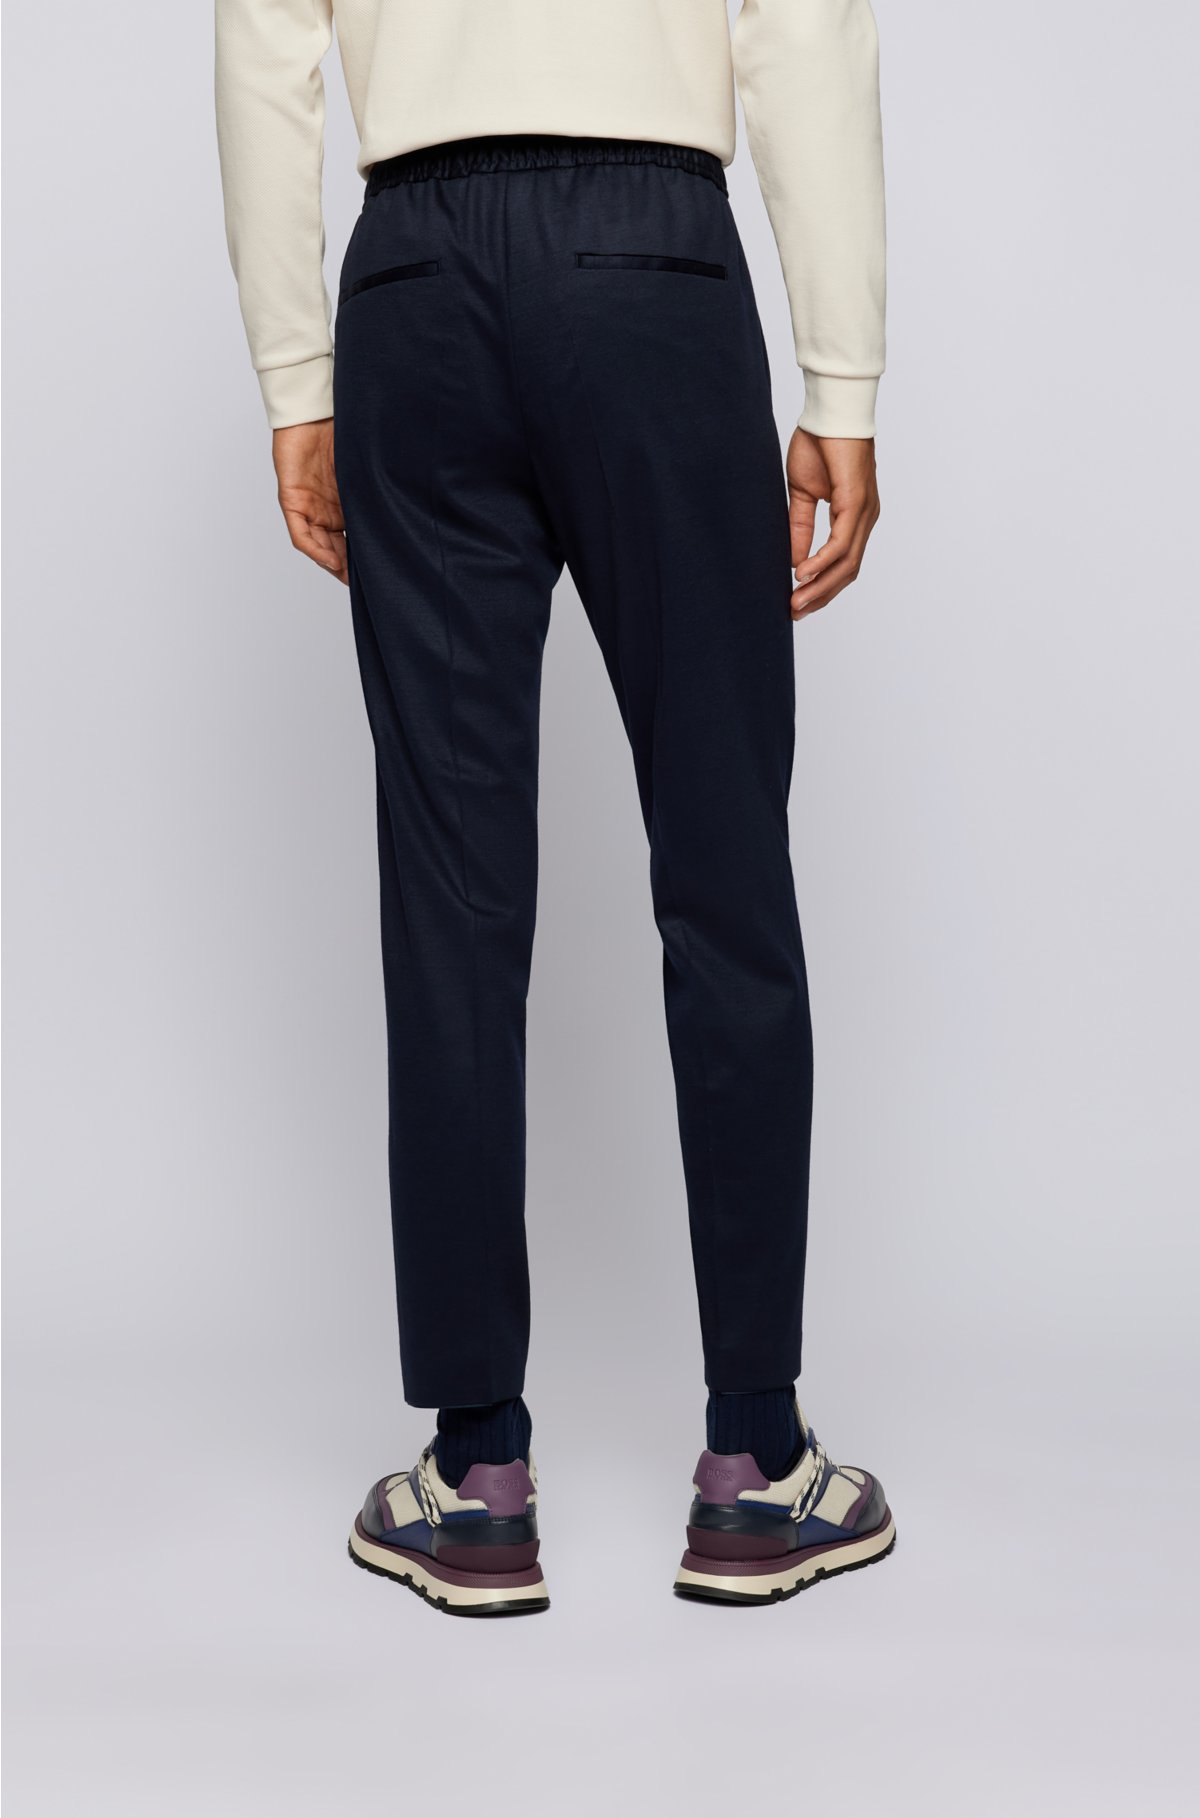 BOSS - Slim-fit trousers in melange stretch jersey